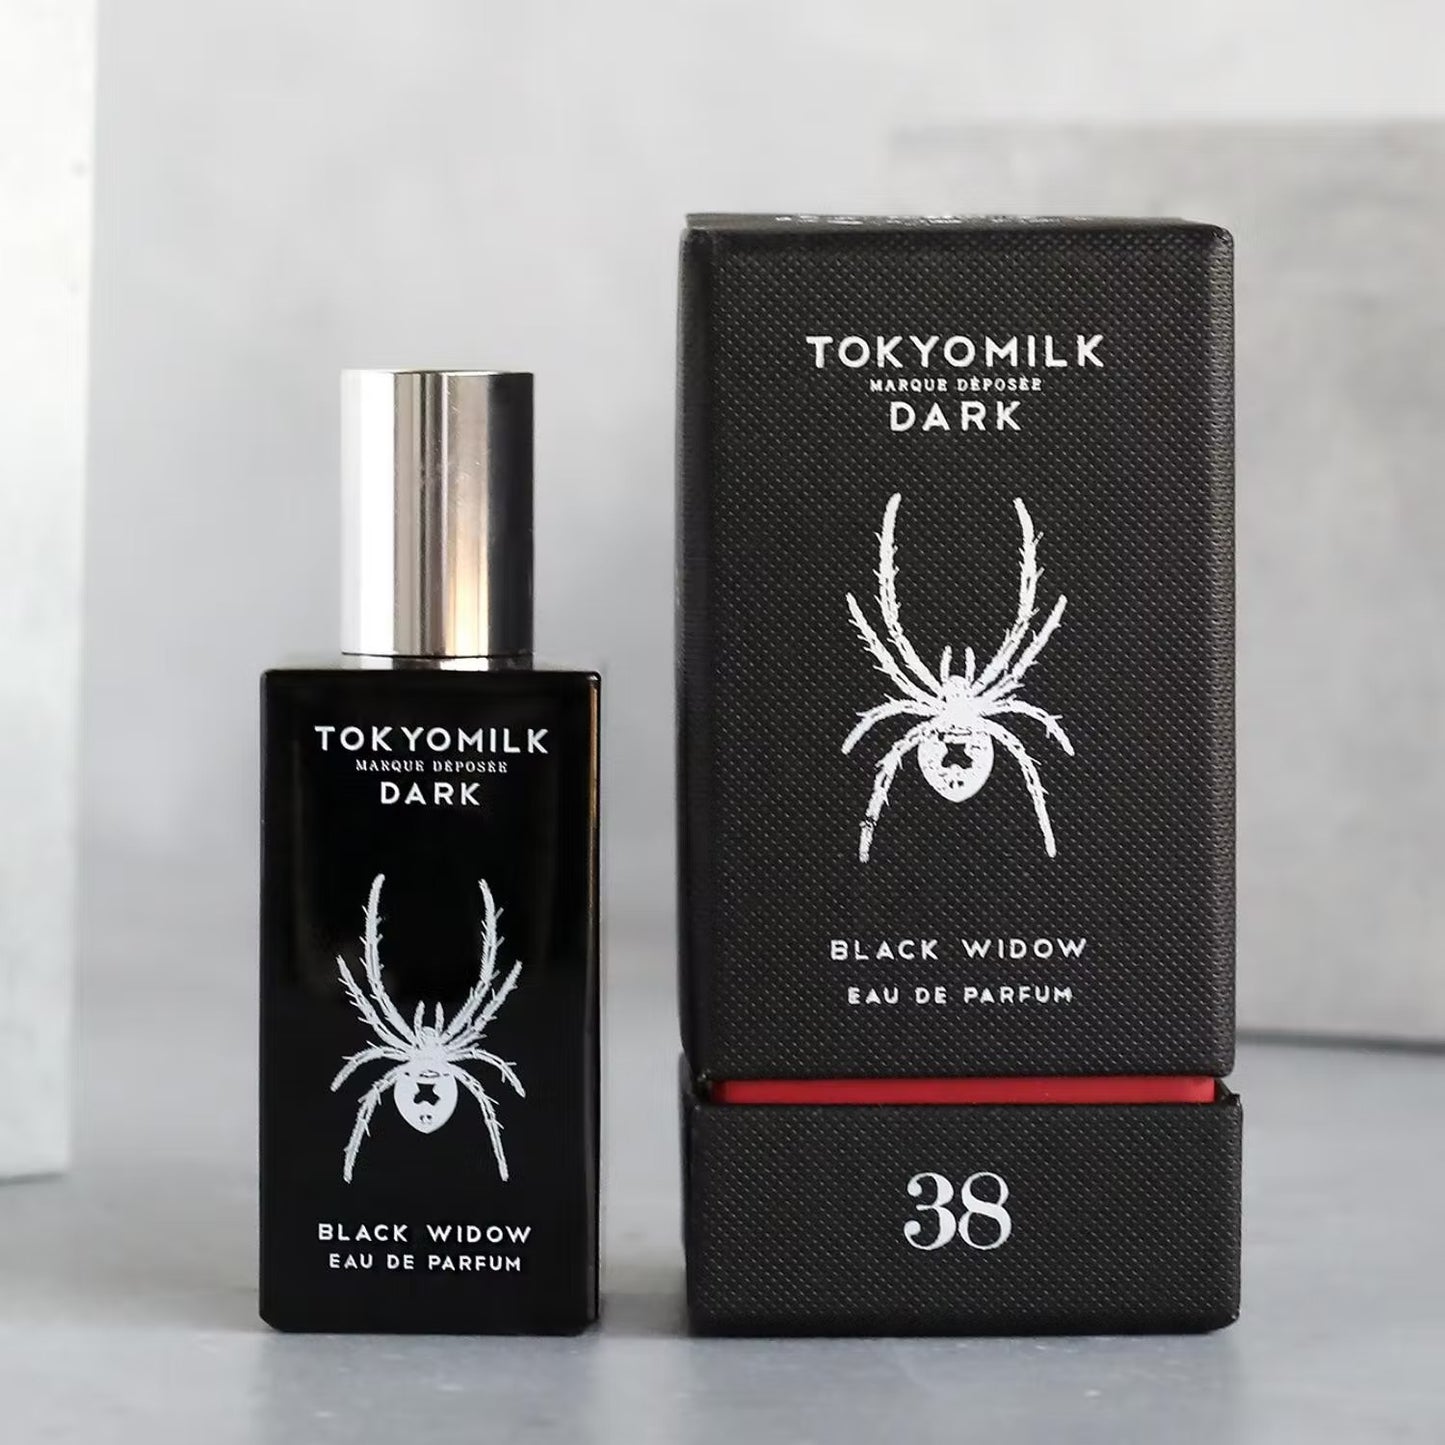 Tokyomilk Dark - 38 Black Widow - Eau de Parfum 45ml